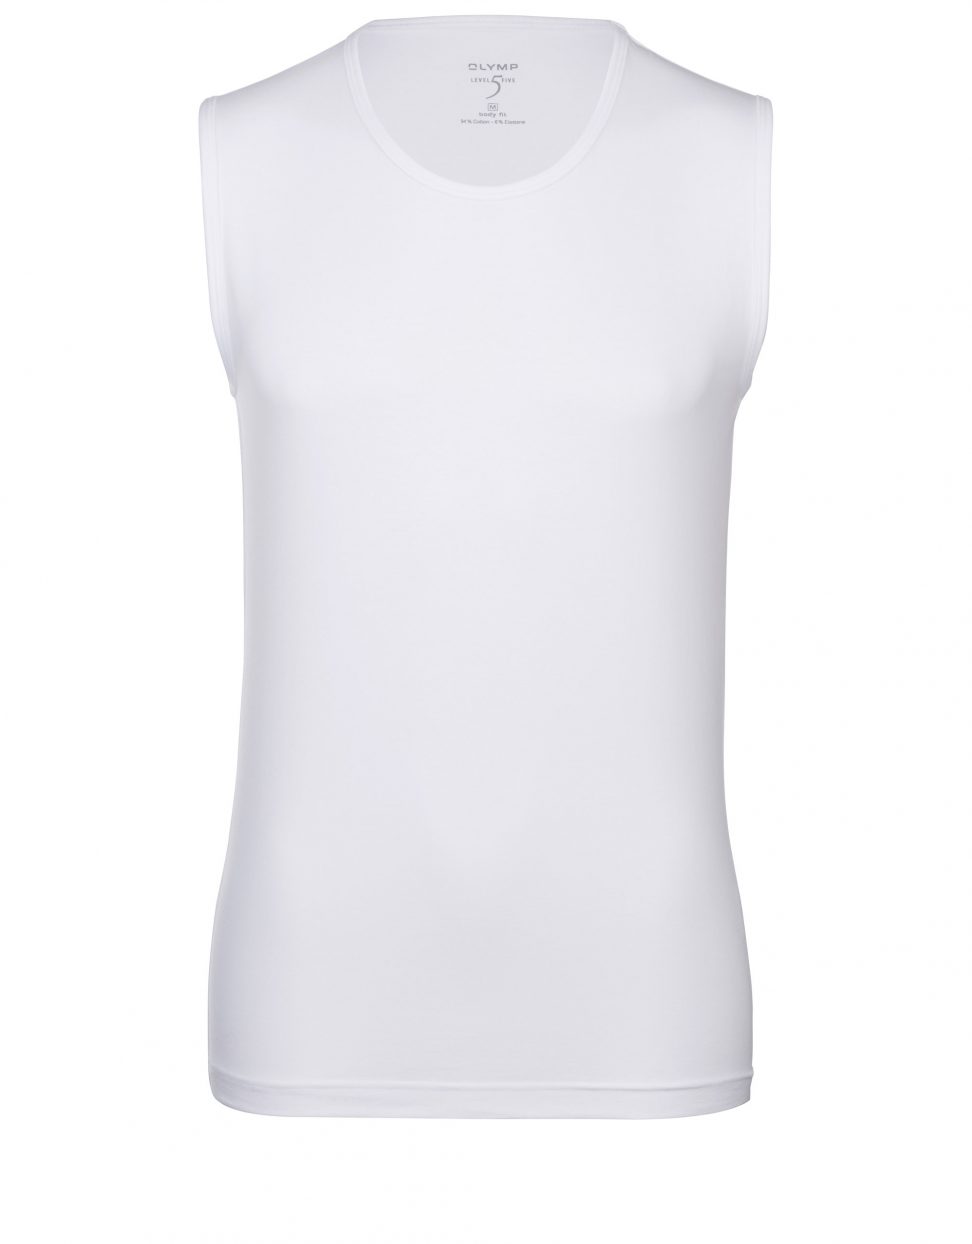 OLYMP T-shirt biały /body fit 08020000 rond-neck